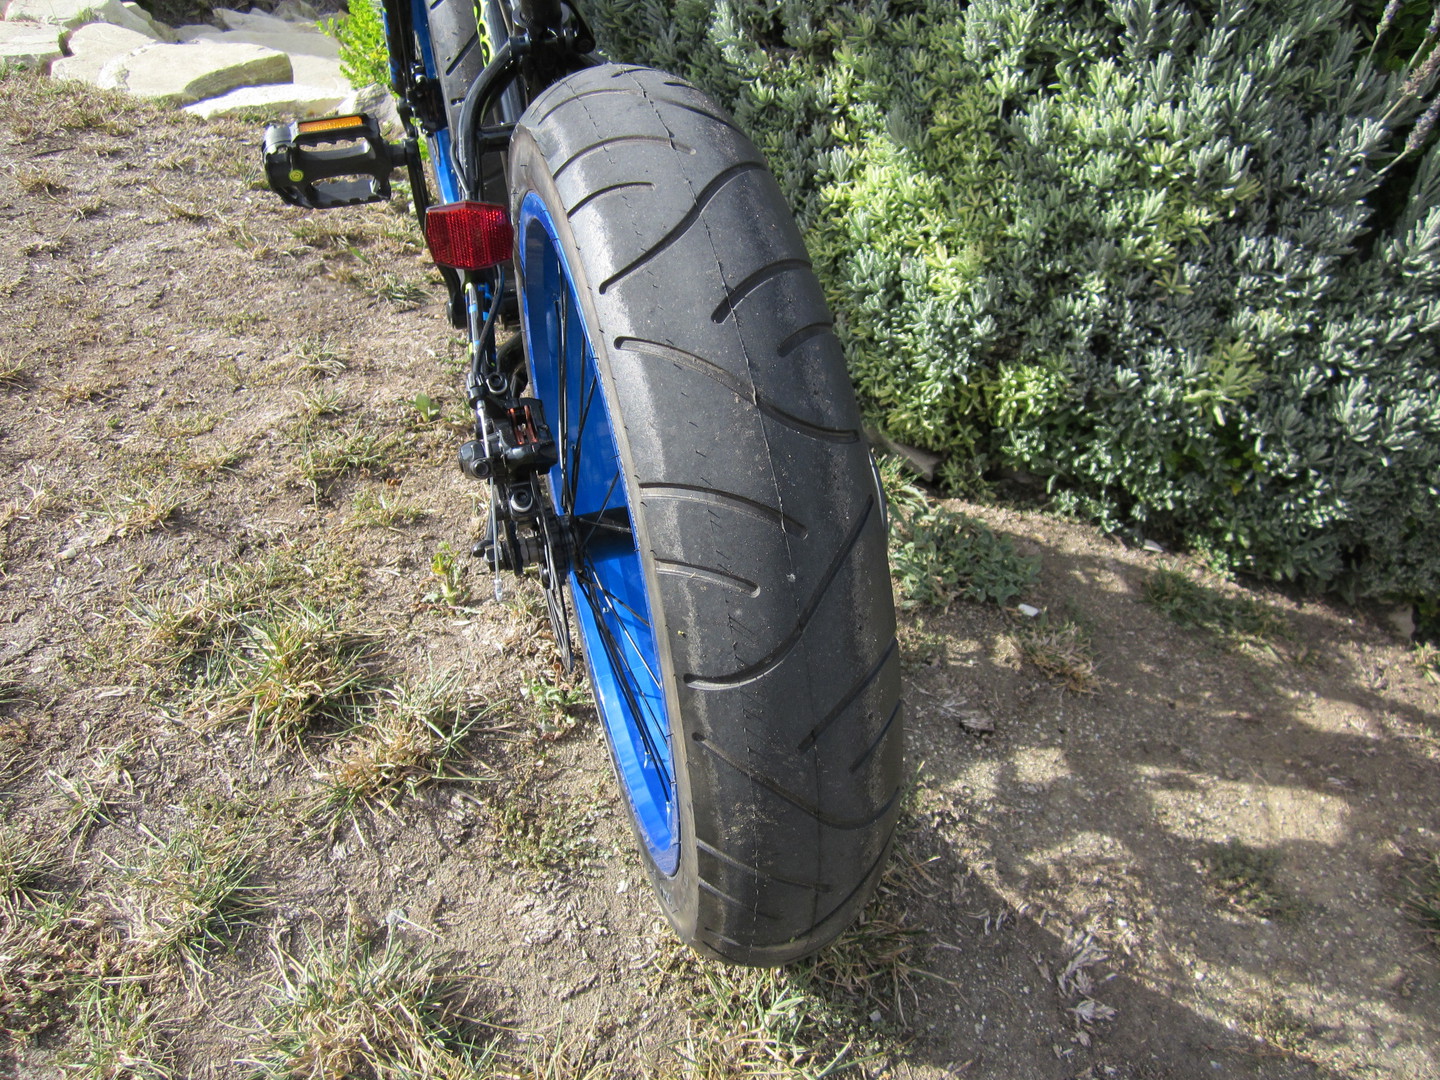 20x4 fat bike wheels